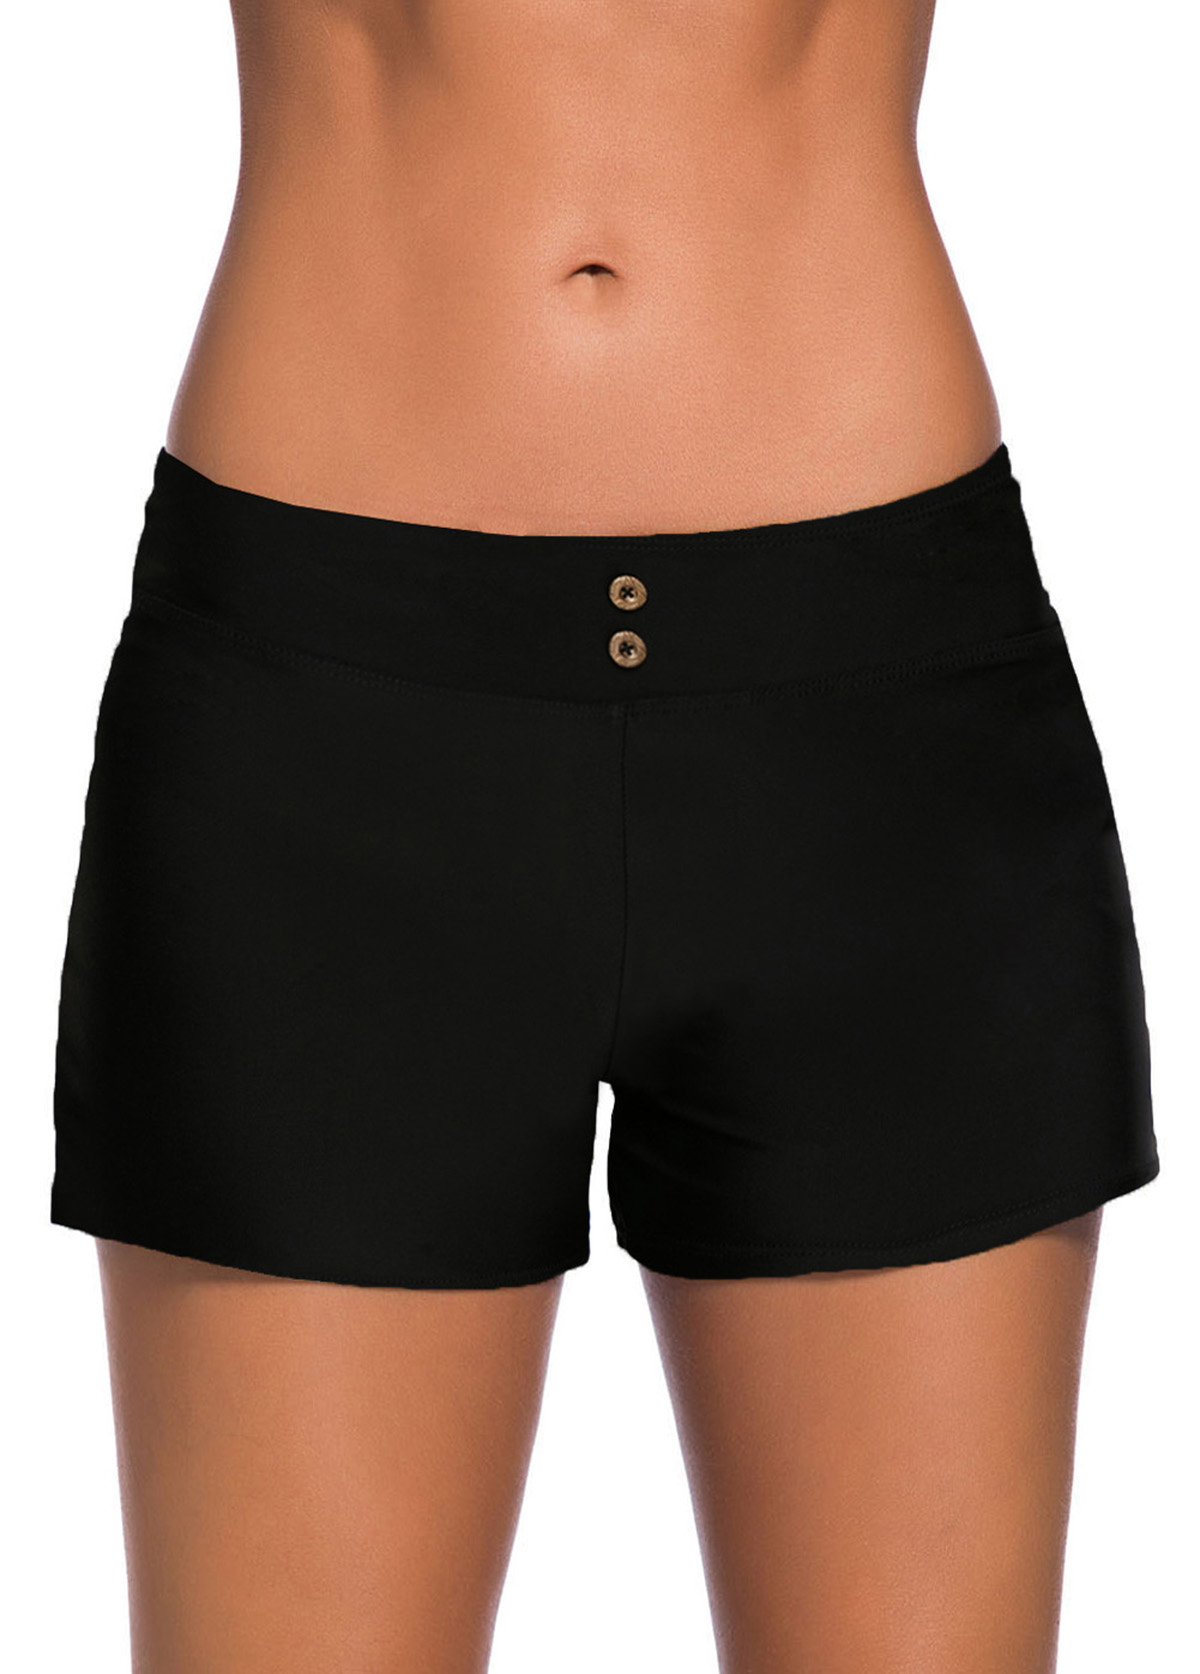 Band Waist Solid Black Swimwear Shorts